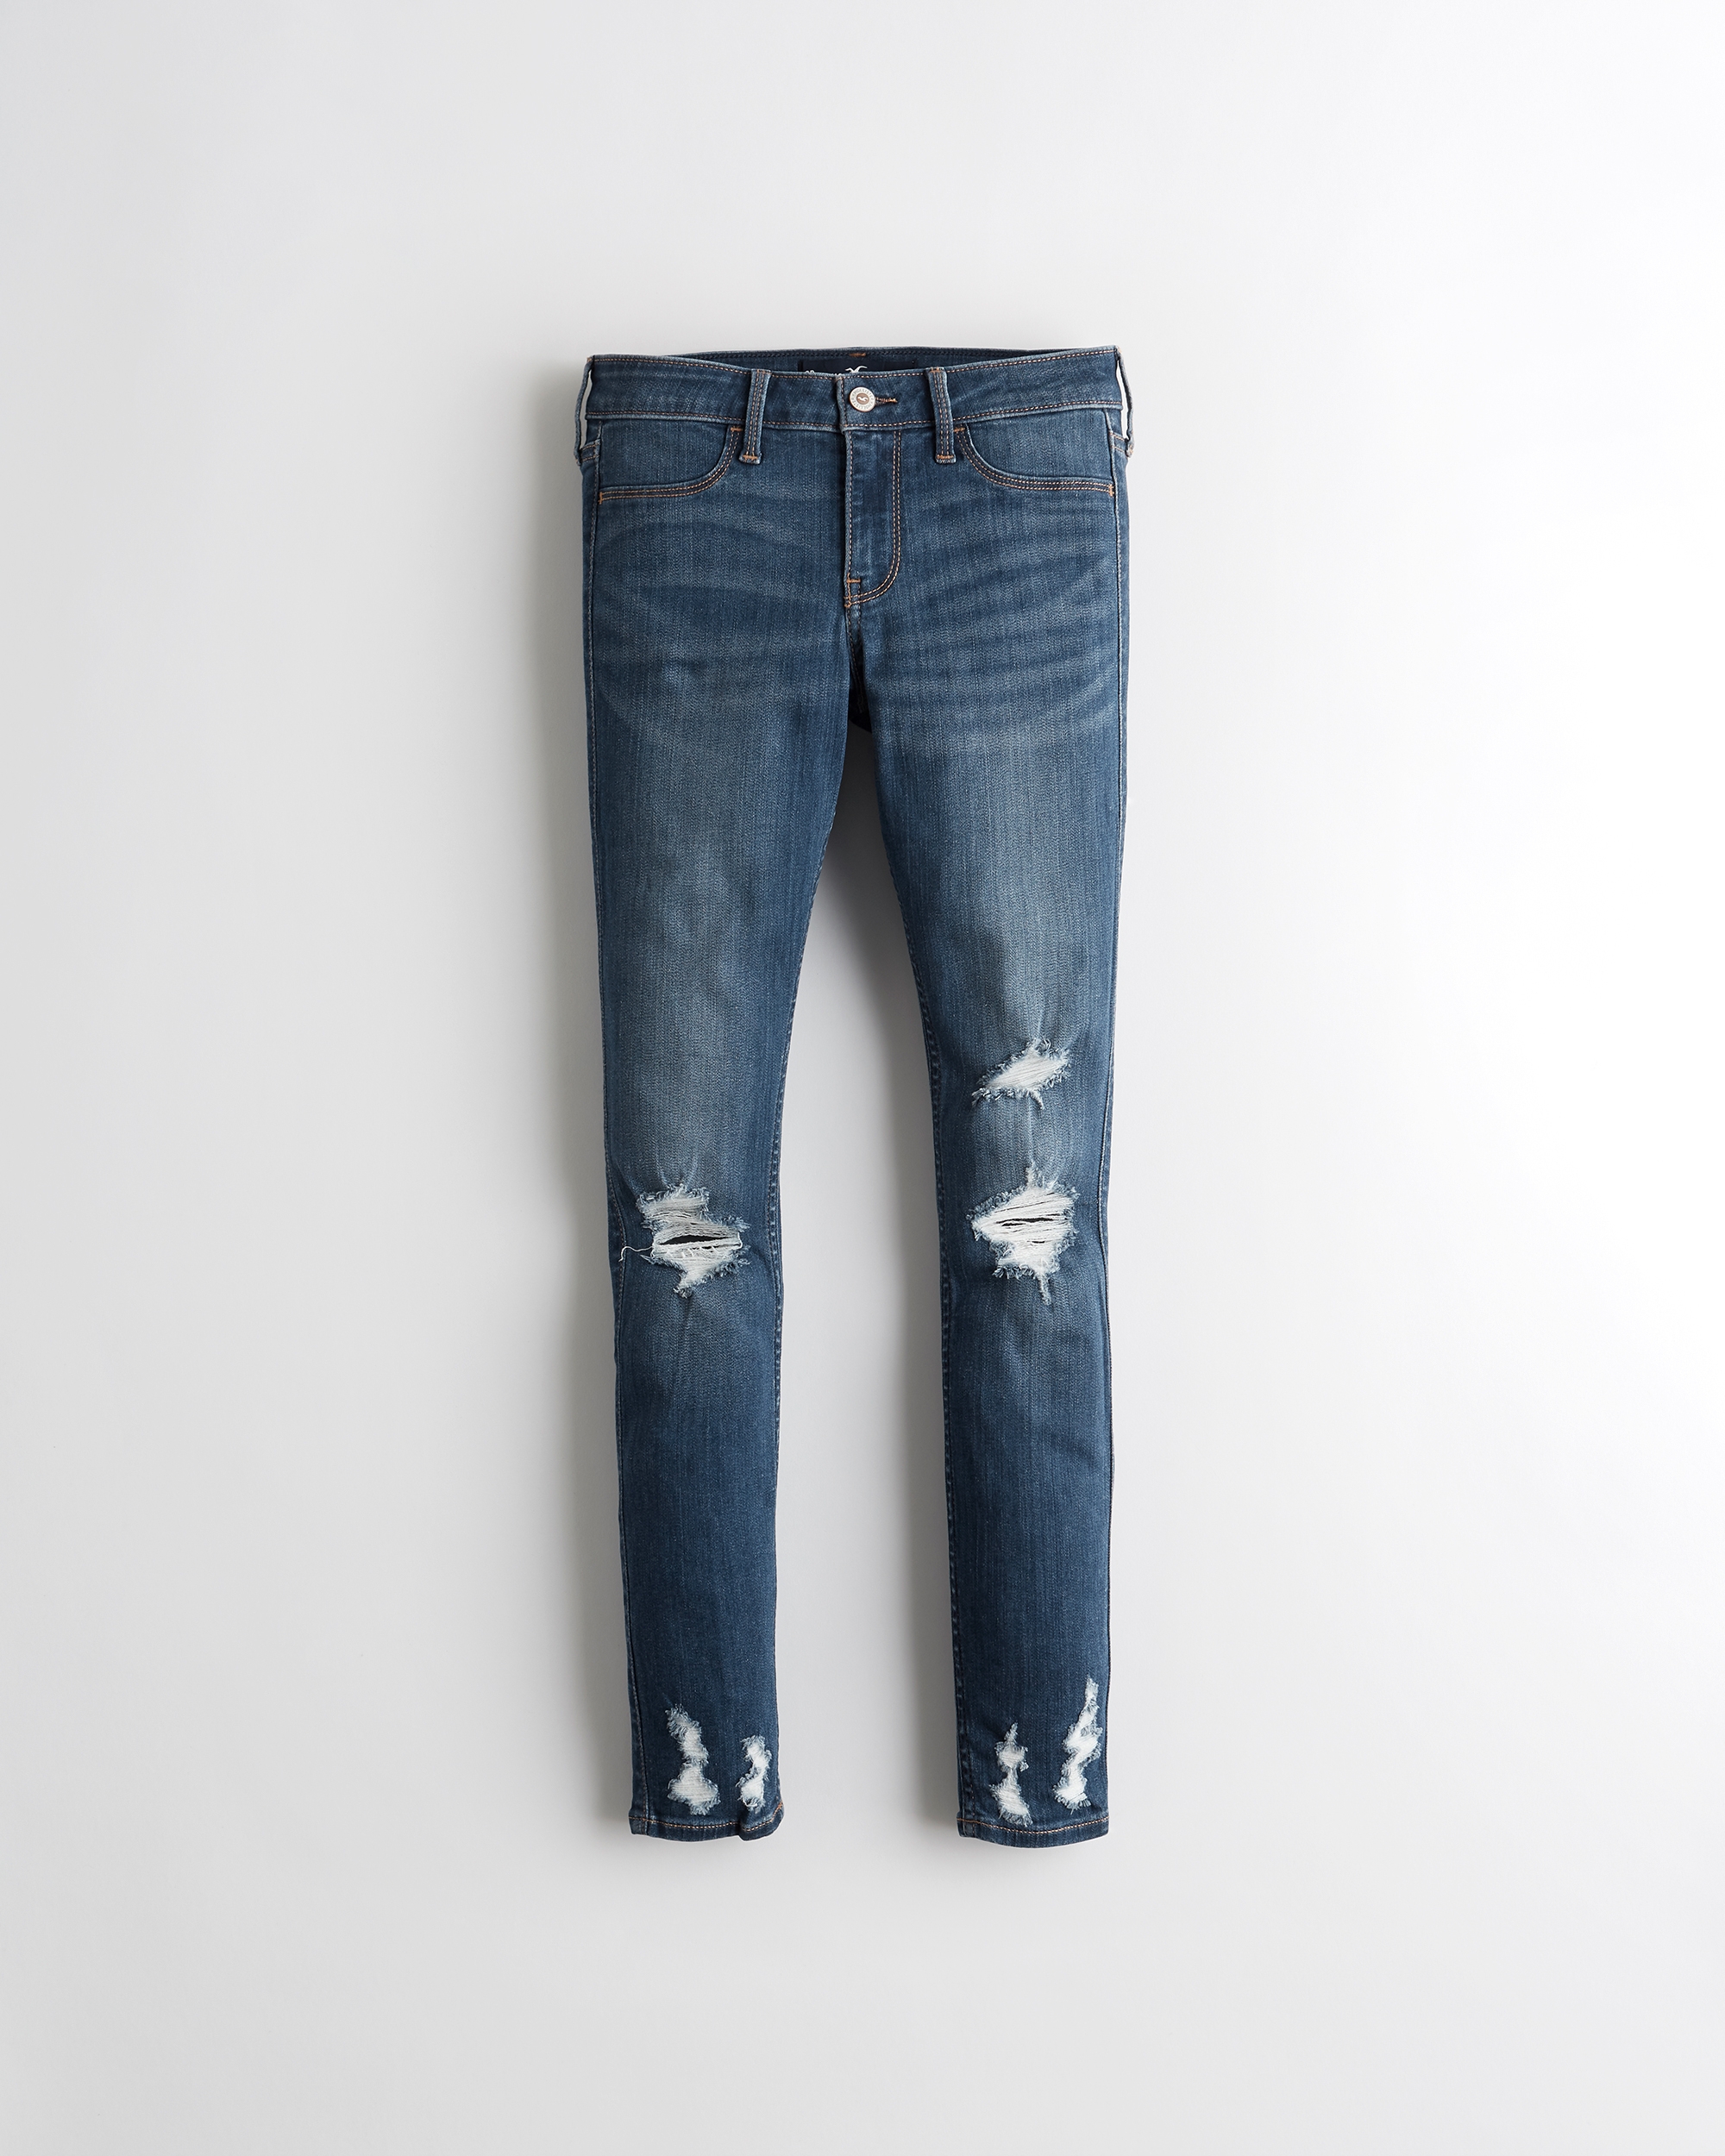 hollister jeans jeggings